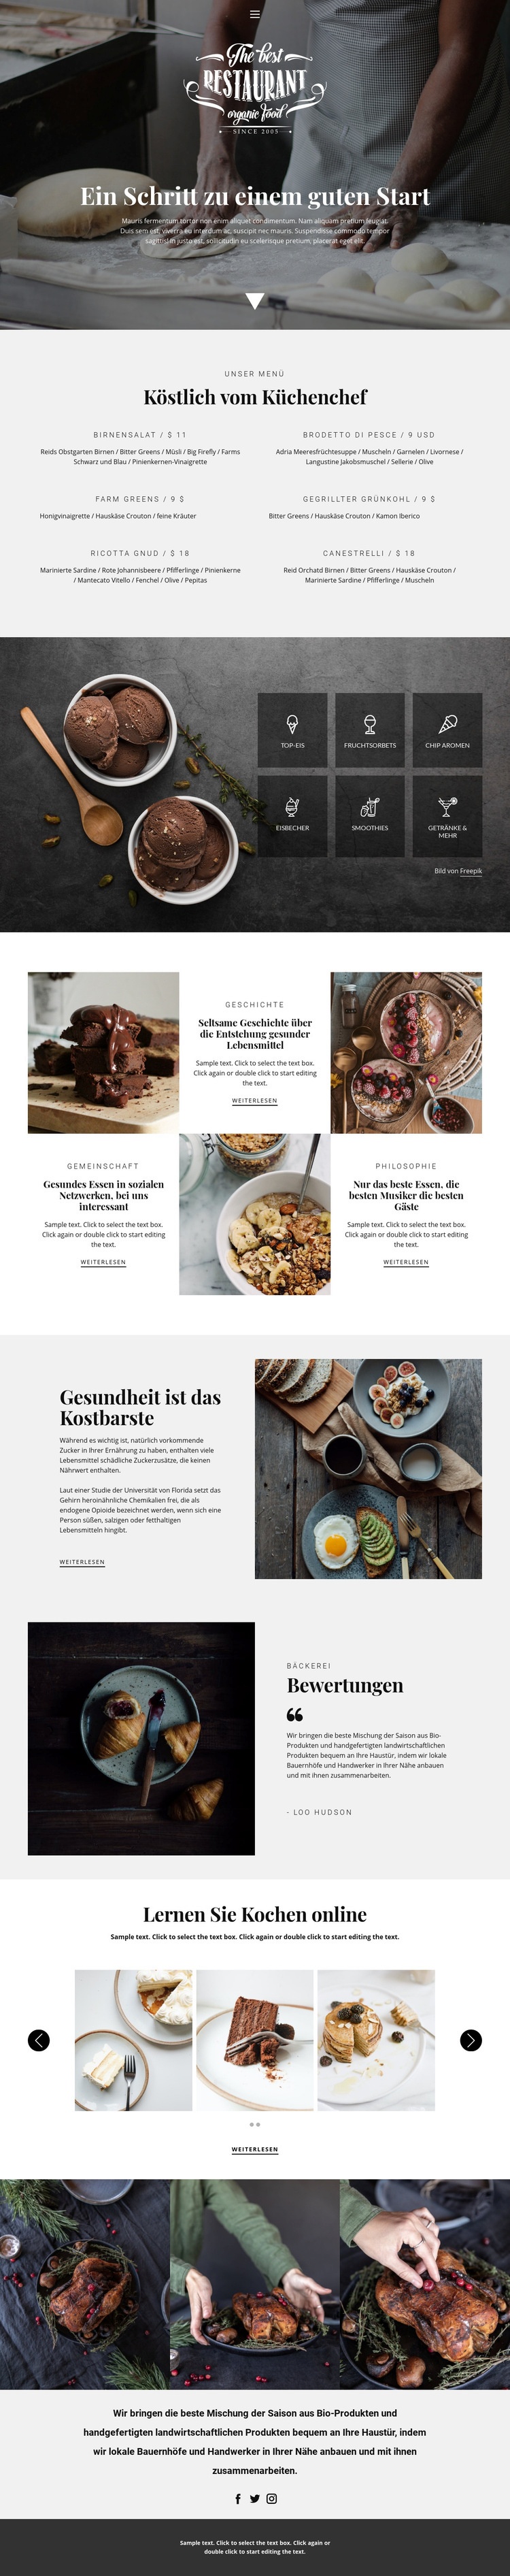 Rezepte und Kochstunden Website-Modell